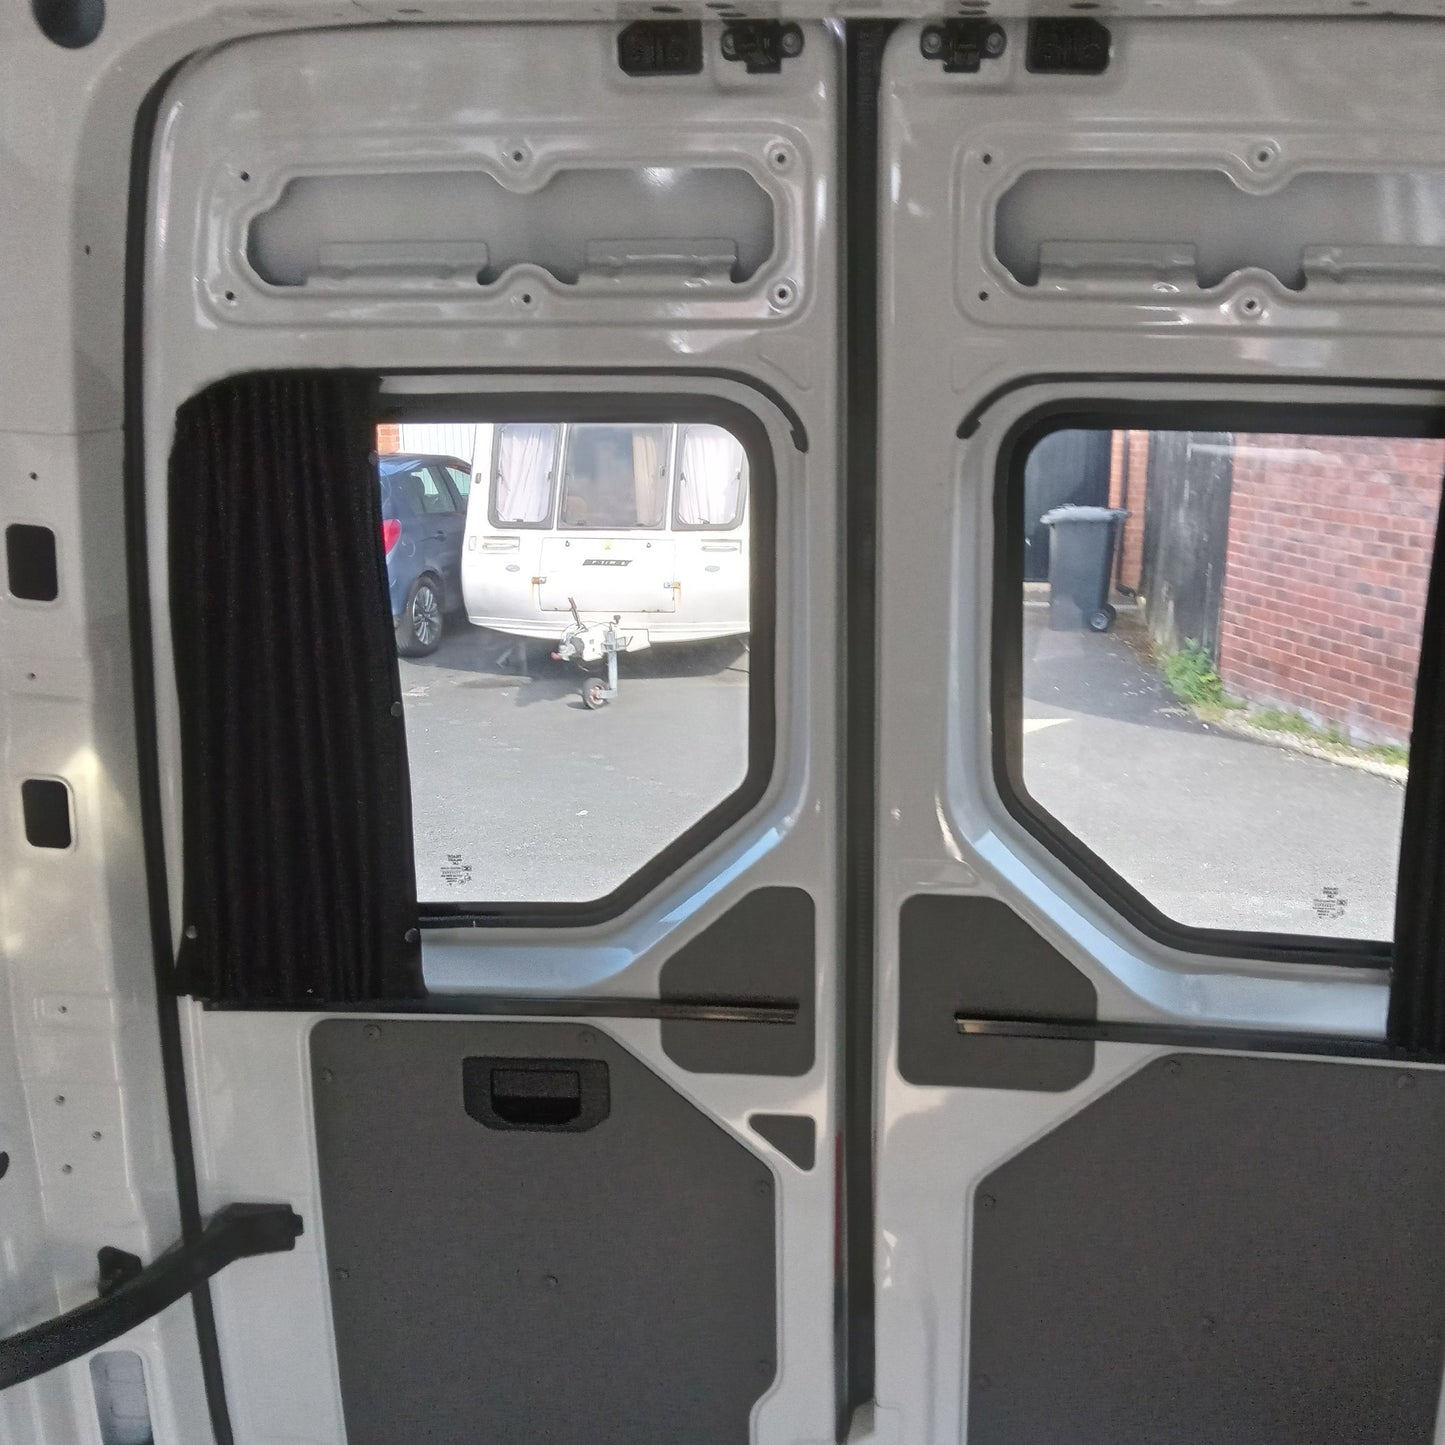 MAN TGE / New Crafter Premium 1 x Barndoor Window Curtains Campervan Conversion Blackout Van-X